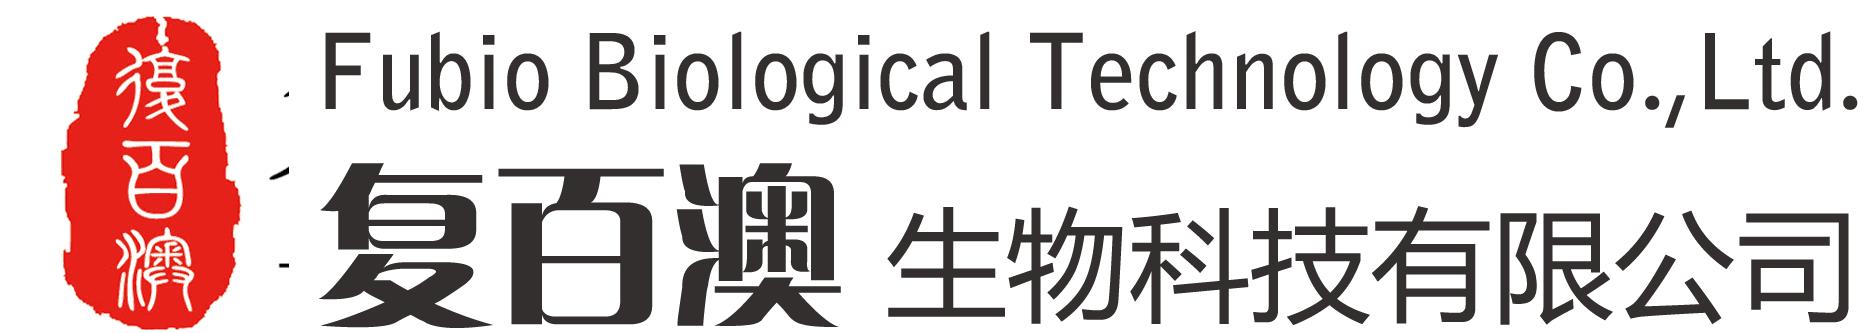 Shanghai Fubaiao Biotechnology Co., Ltd.